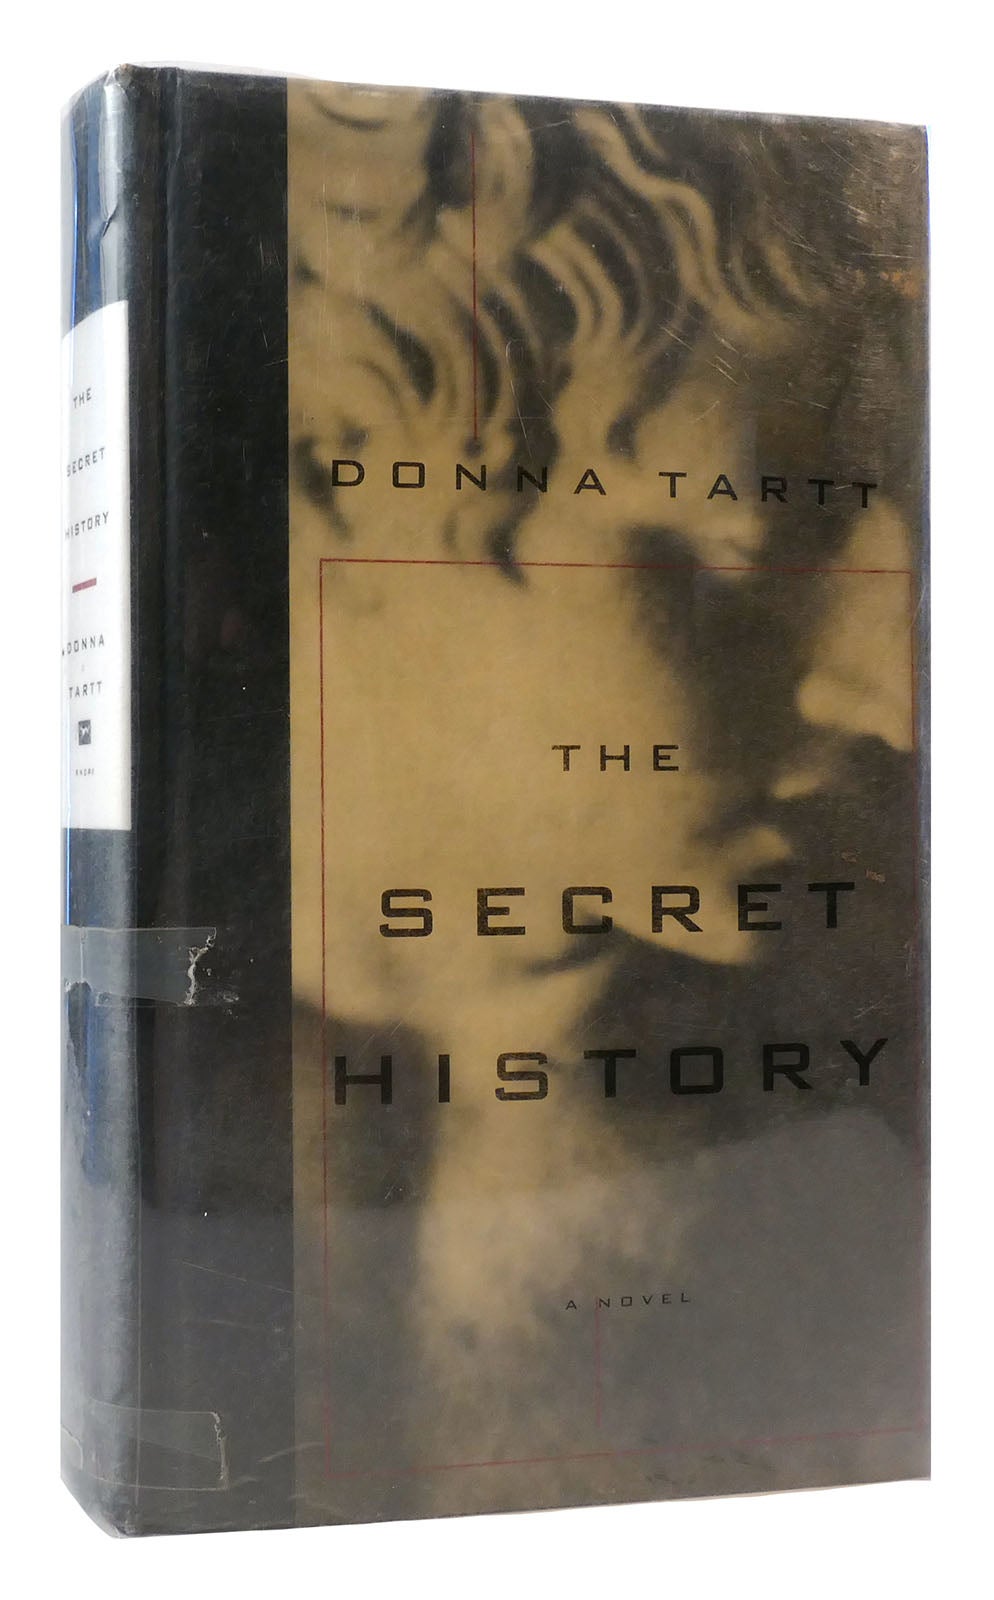 THE SECRET HISTORY by Donna Tartt on Rare Book Cellar